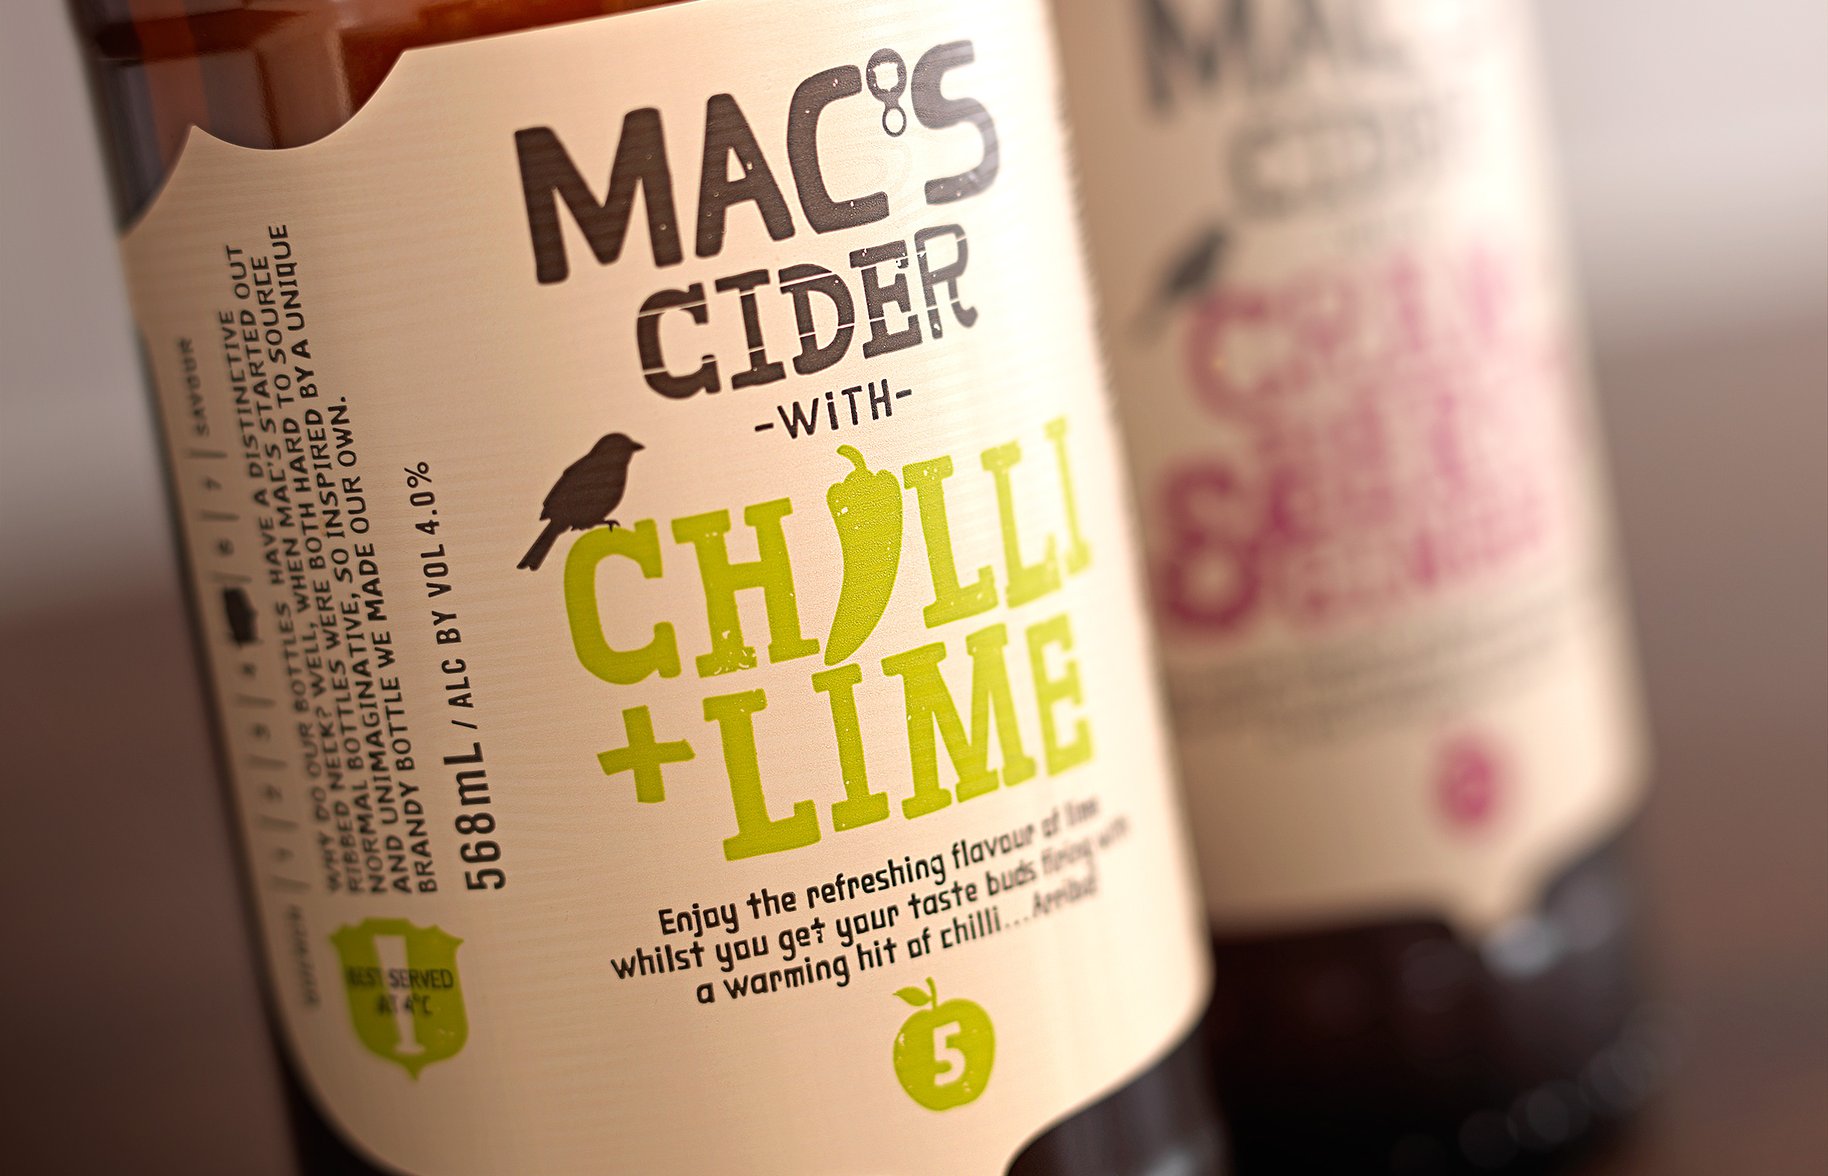 Macs Beer cider detail photography